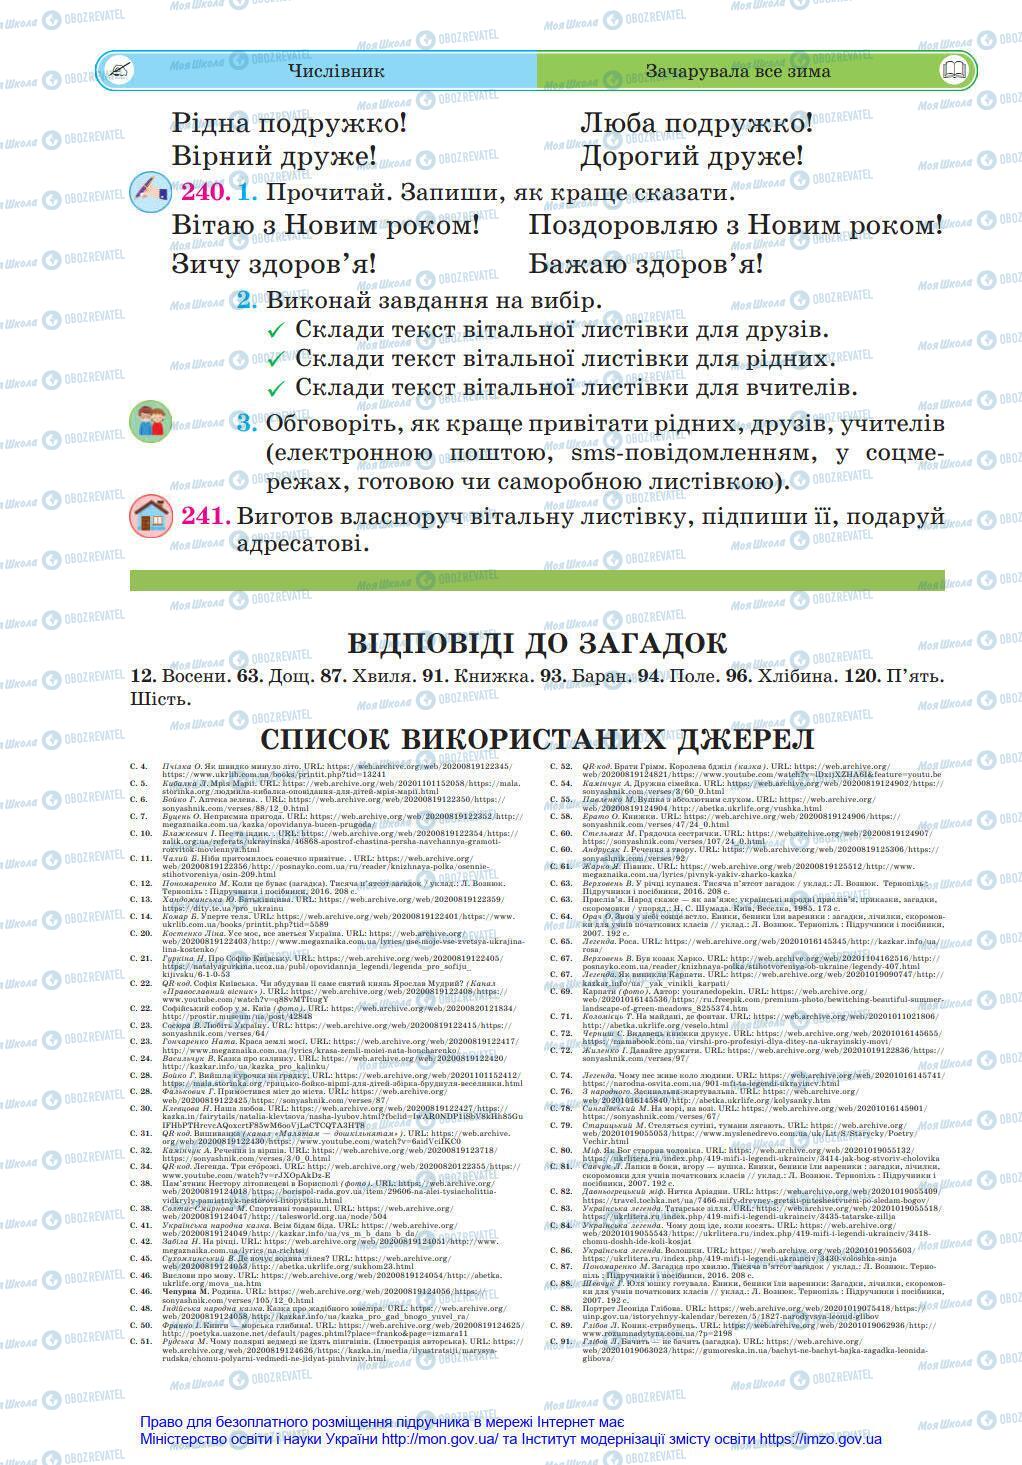 Учебники Укр мова 4 класс страница 126